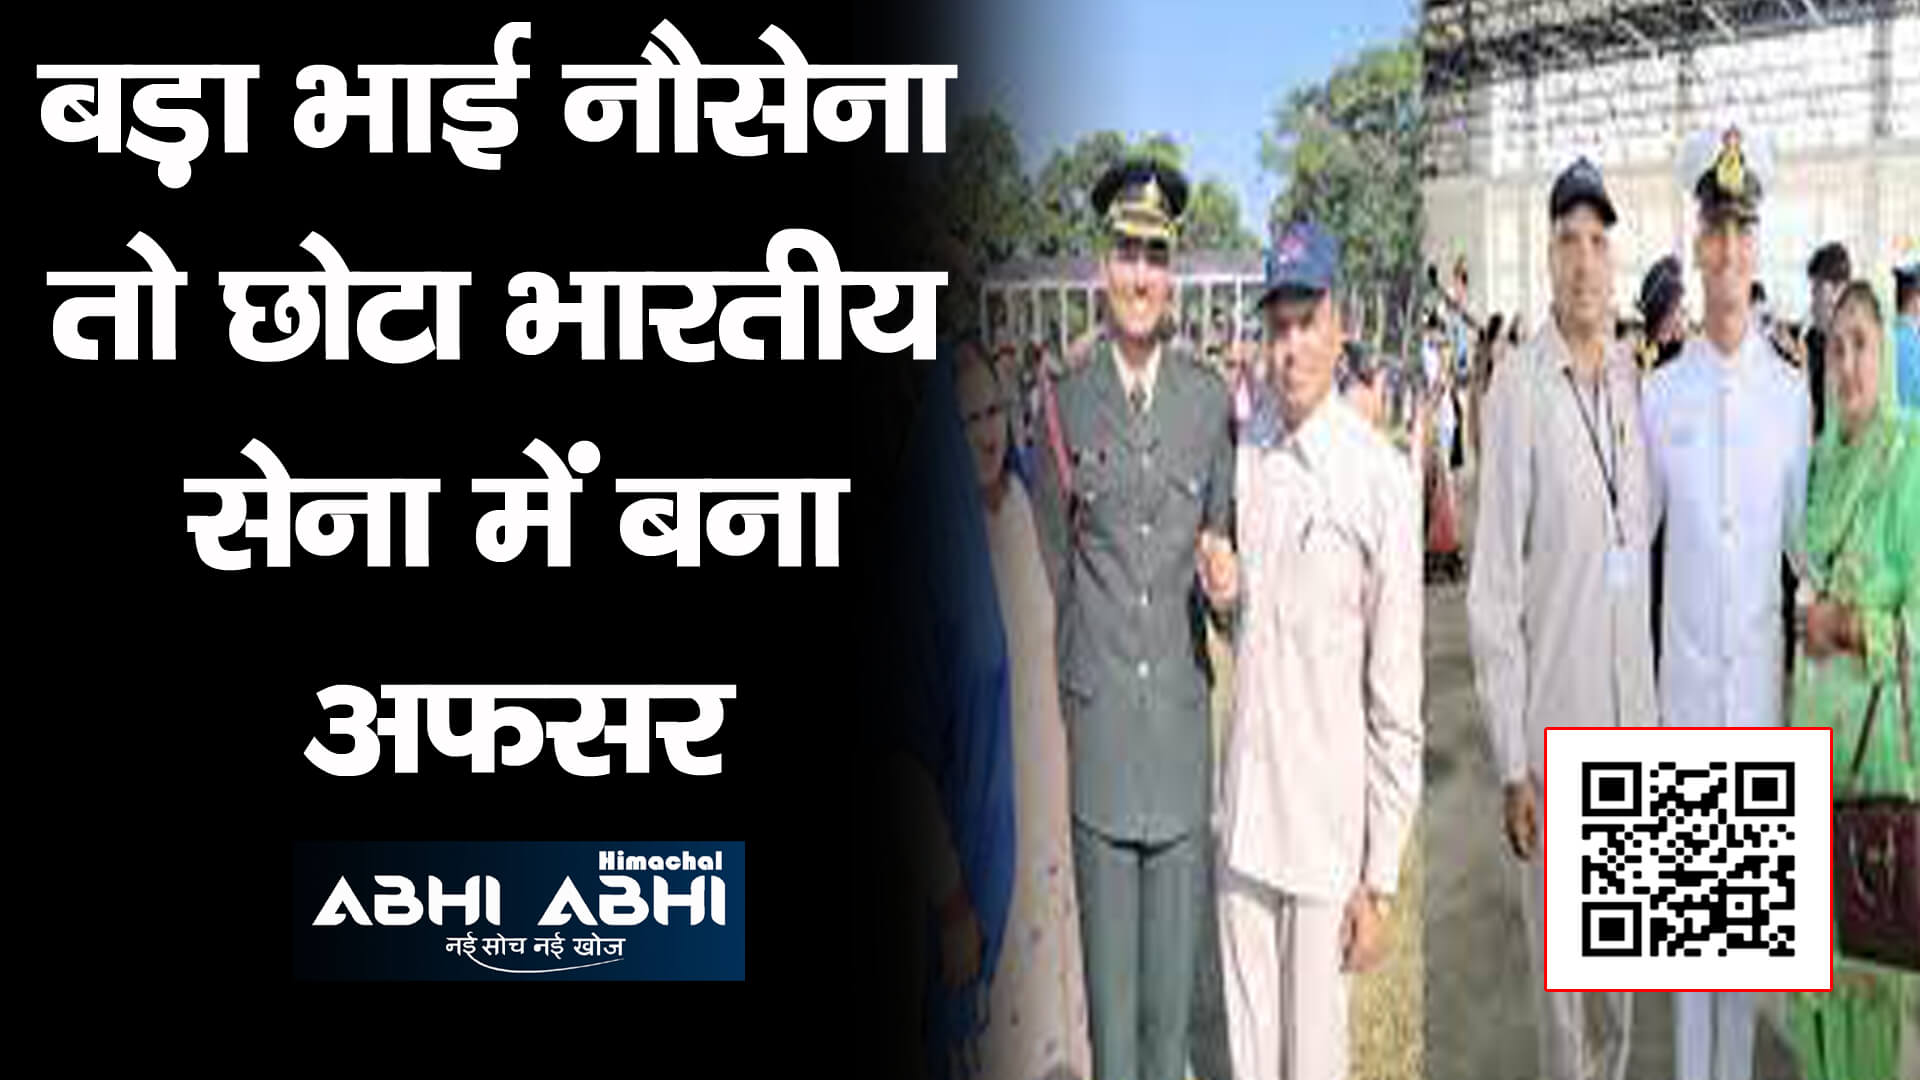 बड़ा भाई नौसेना तो छोटा भारतीय सेना में बना अफसर